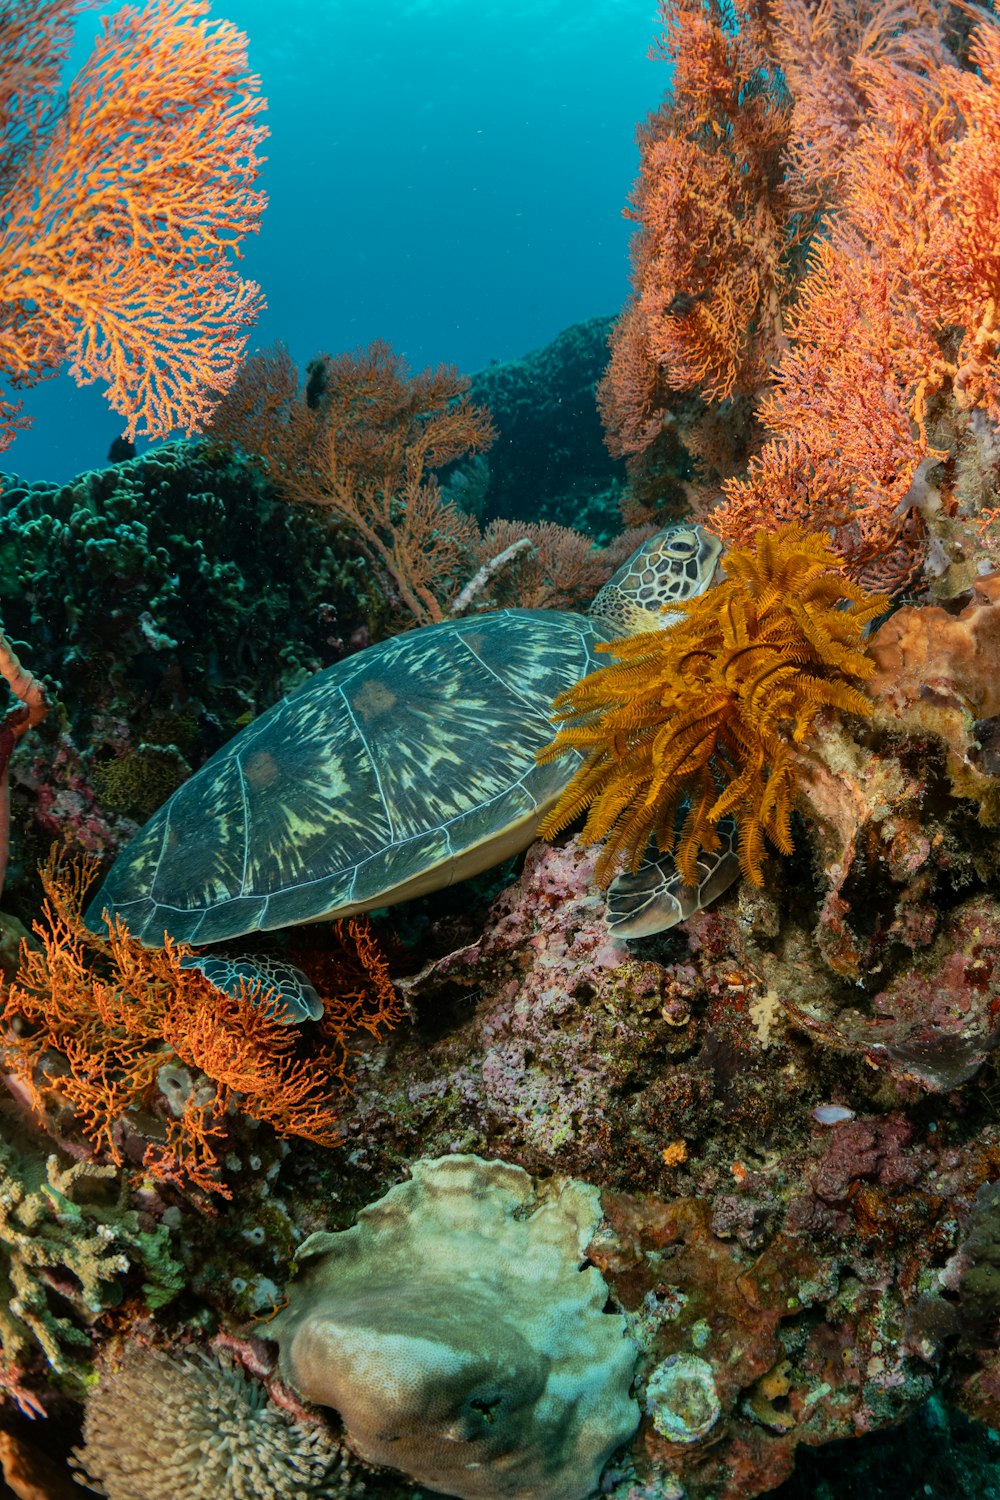 Una tartaruga che nuota su una barriera corallina colorata